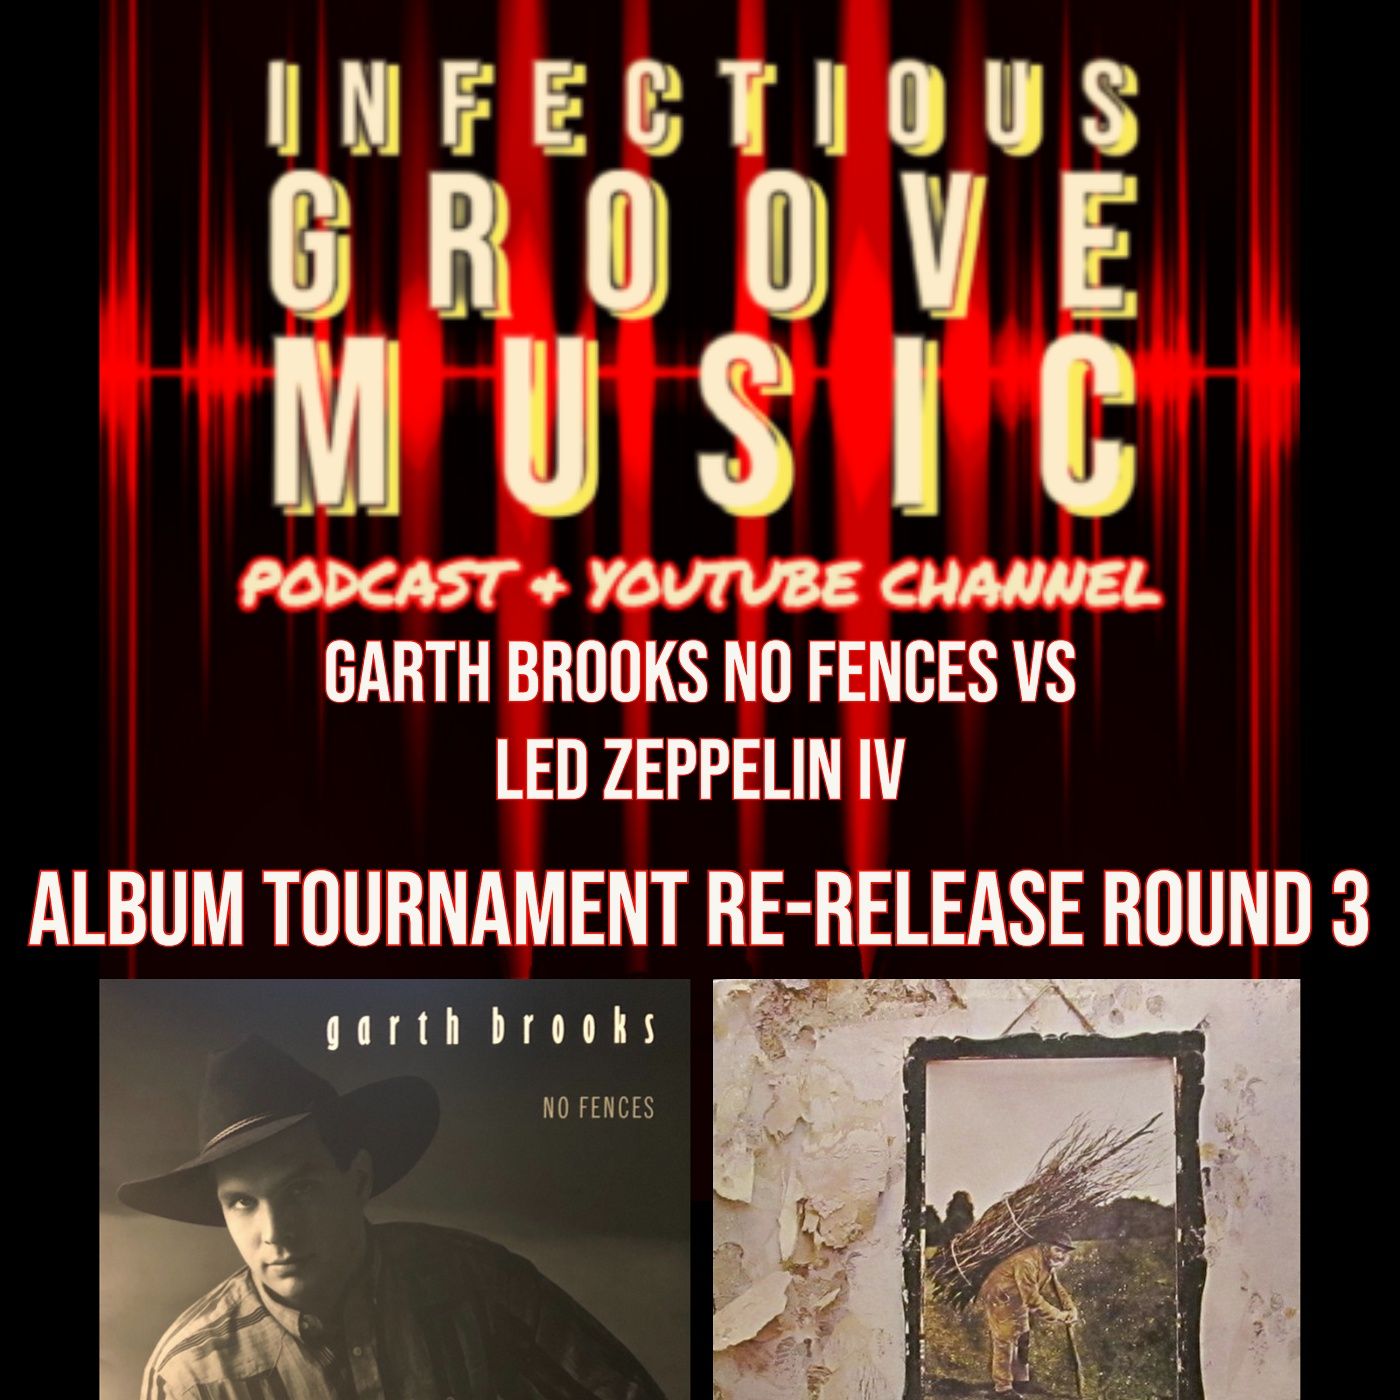 Album Tournament Re-Release Round 3 - Garth Brooks Vs Led Zeppelin